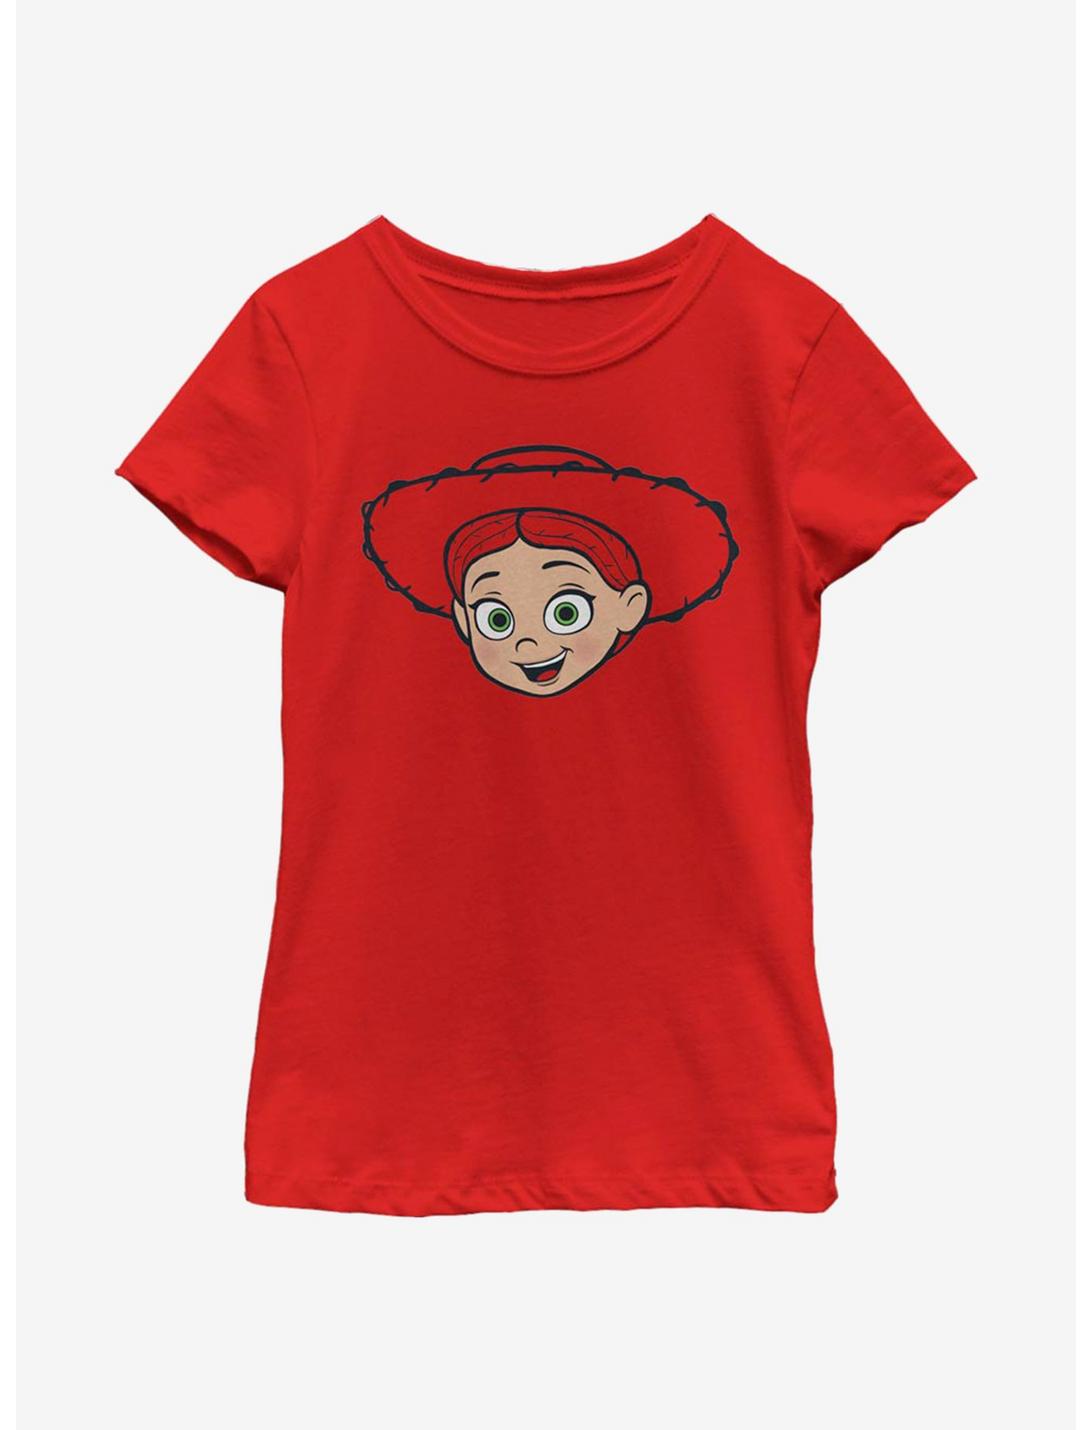 Disney Pixar Toy Story Big Face Jessie Youth Girls T-Shirt, RED, hi-res